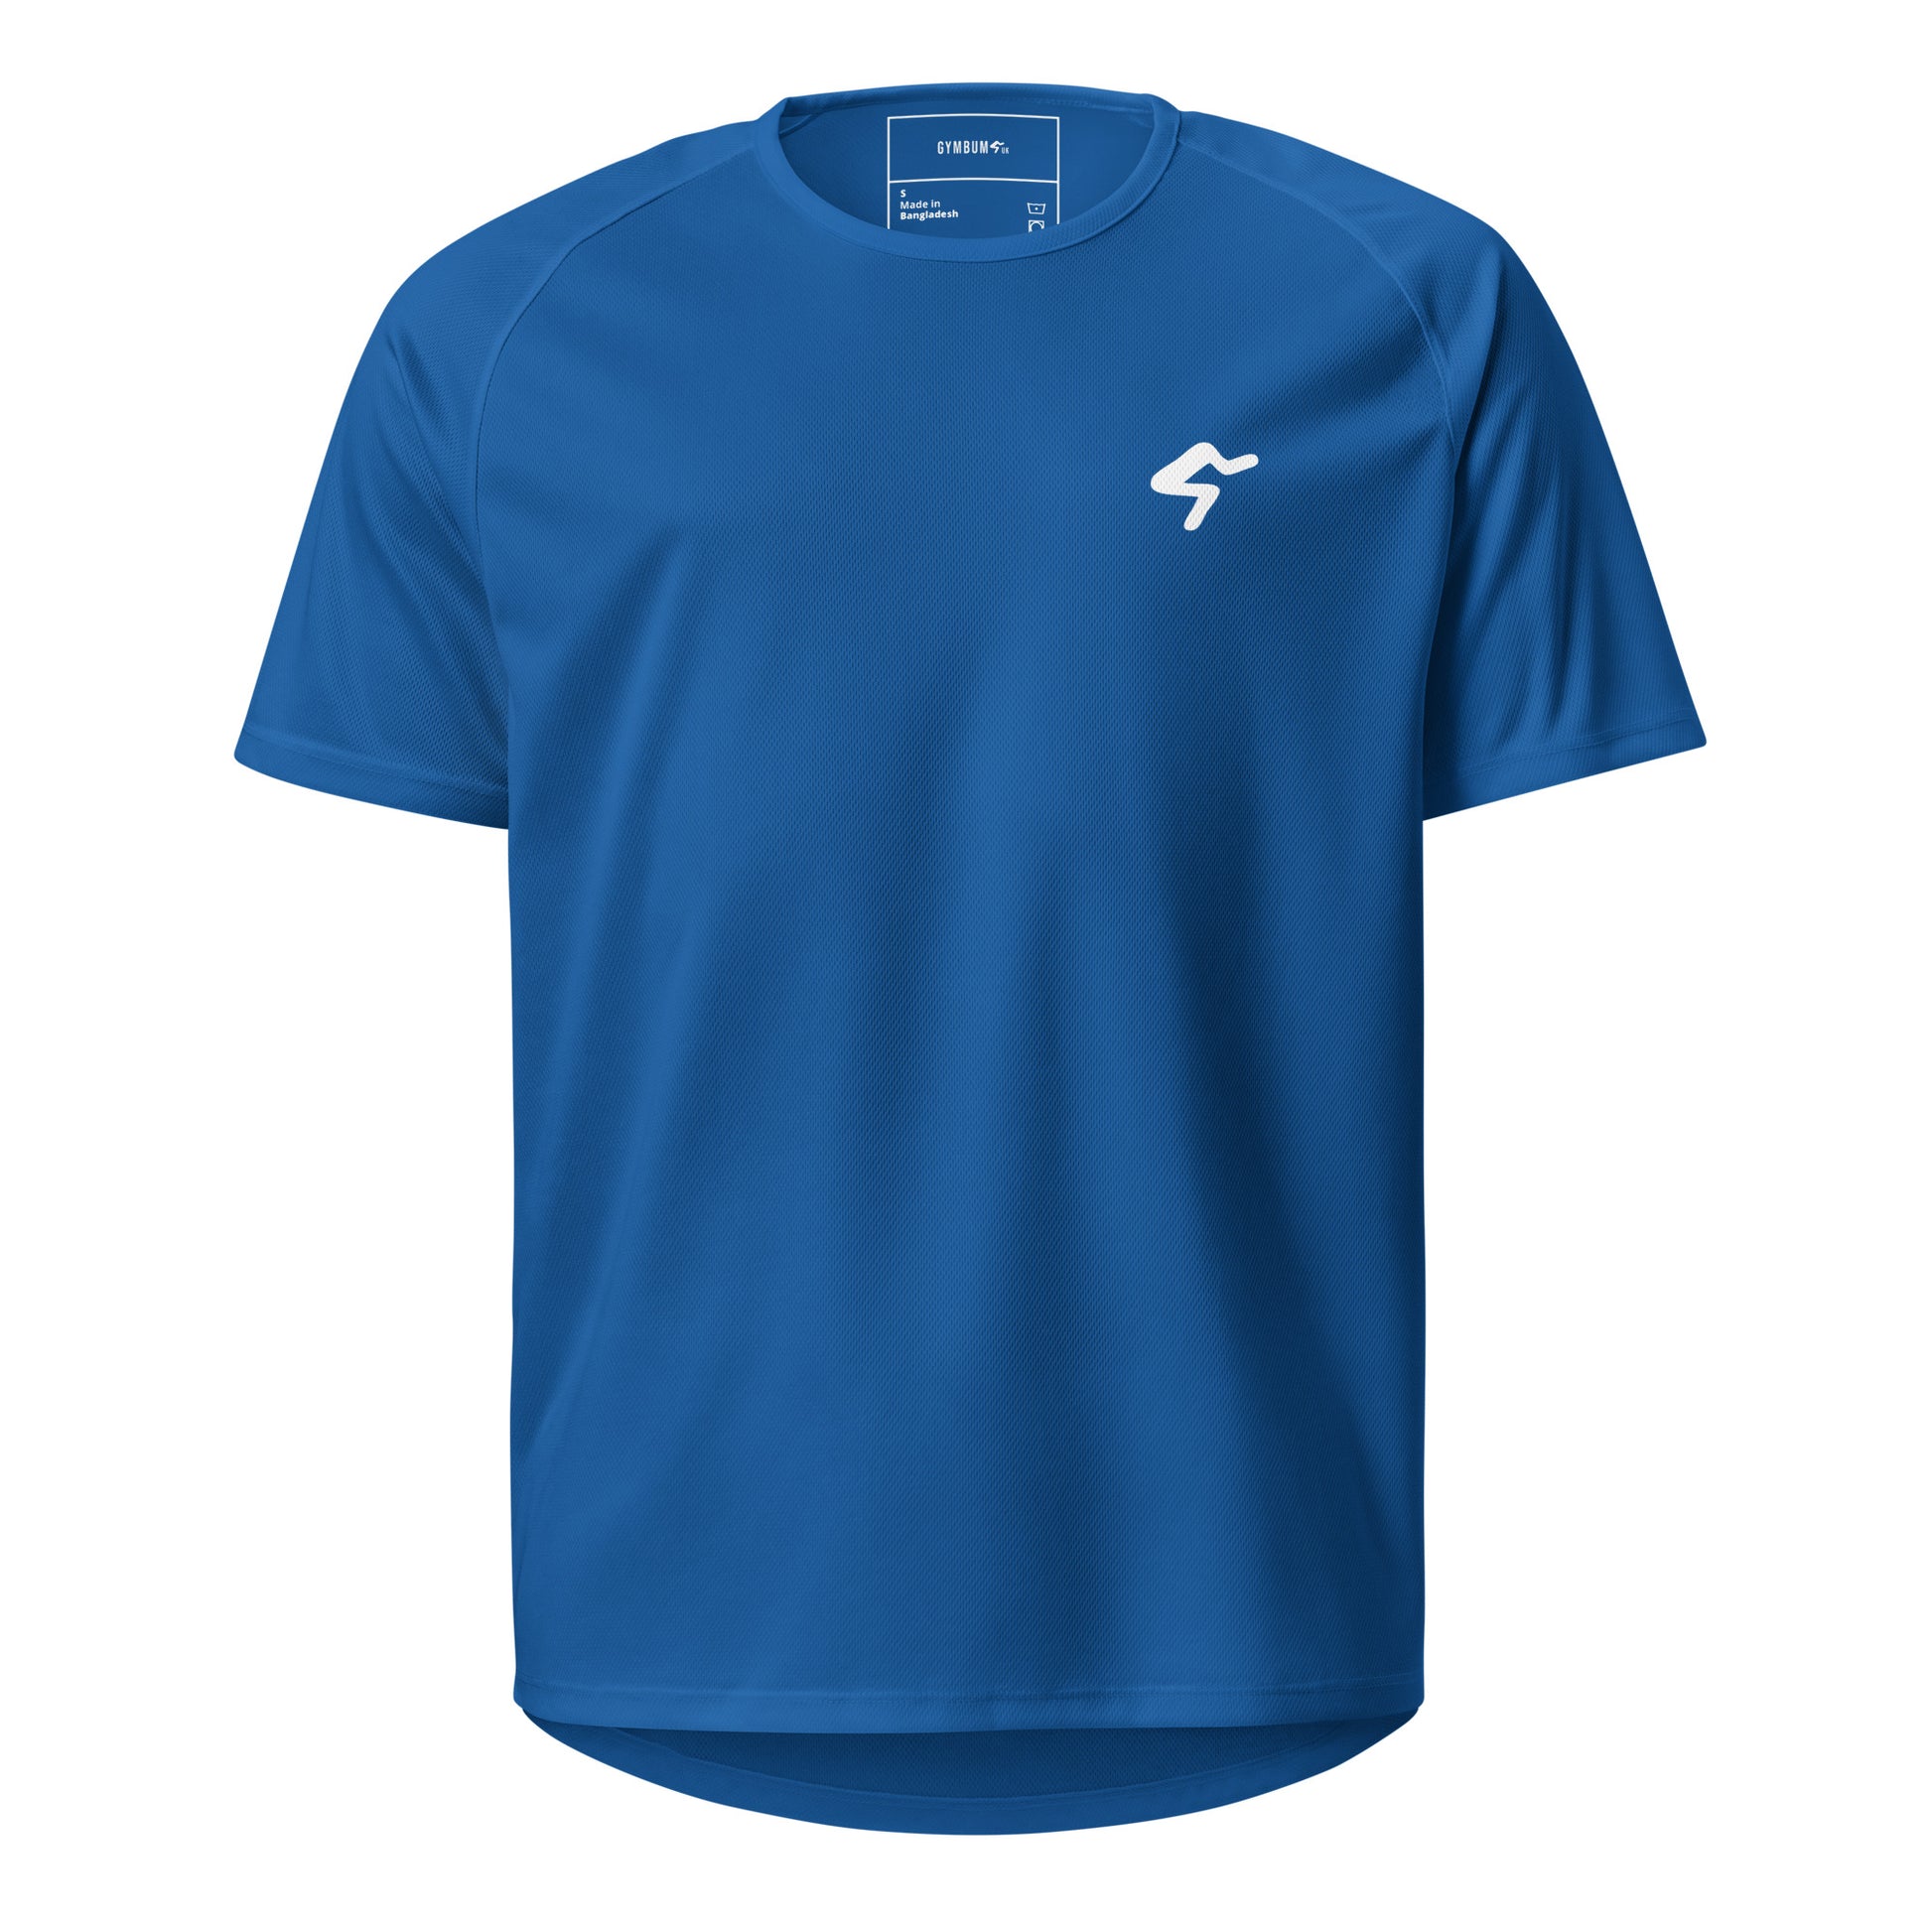 The GymbumUK Squat QuickDry Unisex Performance Sport T-Shirt